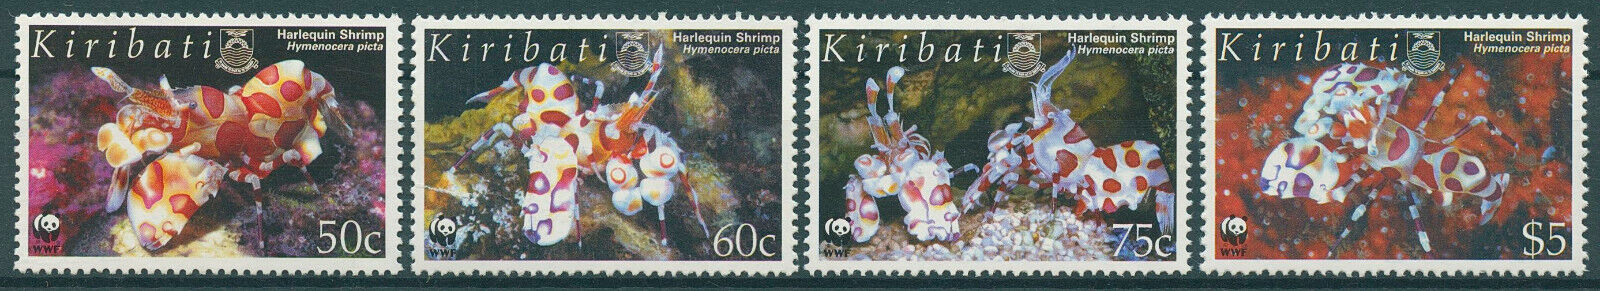 Kiribati 2005 MNH WWF Stamps Harlequin Shrimps Marine Animals 4v Set